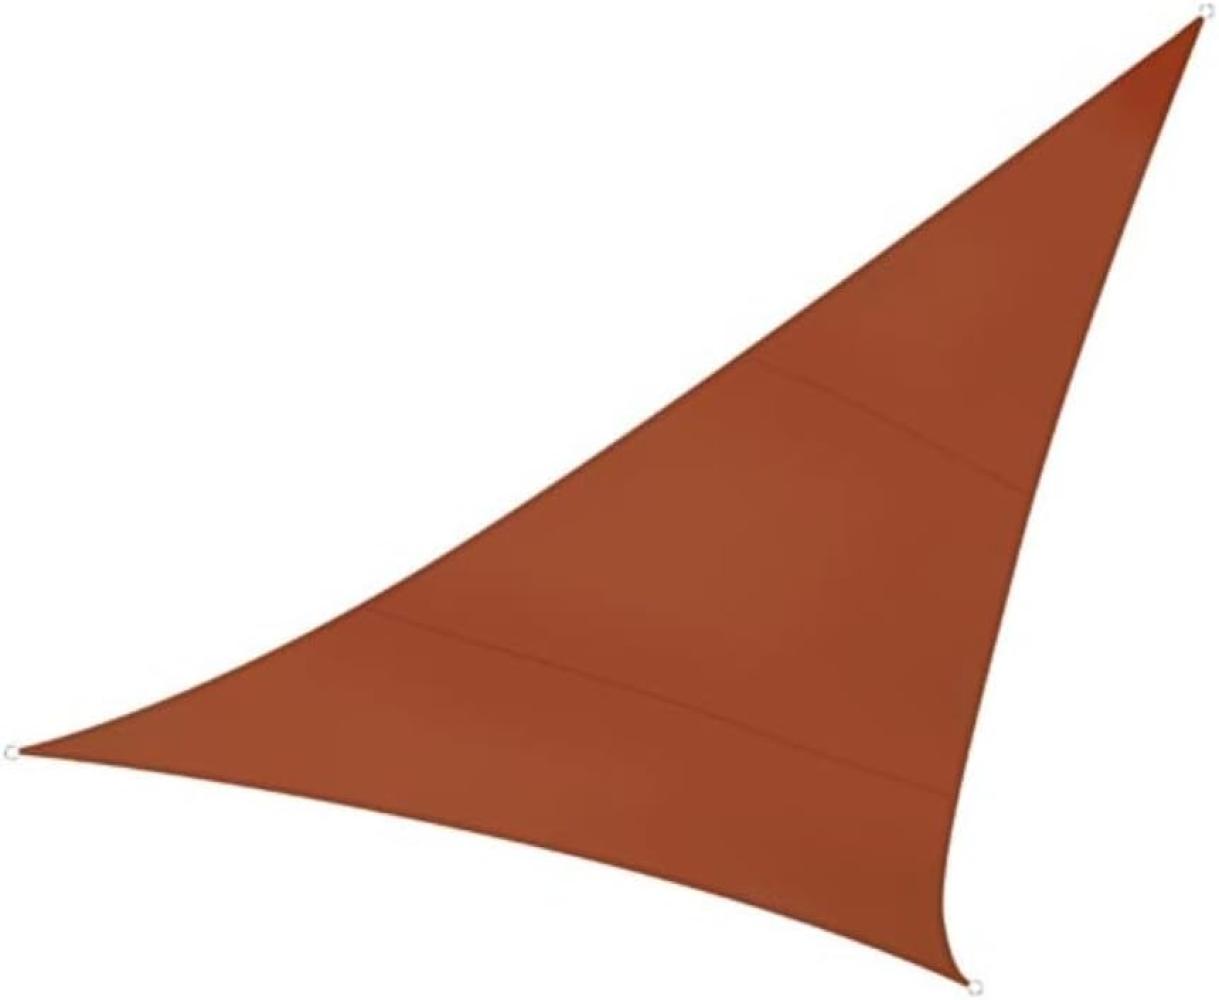 Sonnensegel Dreieck Terracotta 5m - Sonnenschutzsegel für Balkon Terrassensegel Bild 1